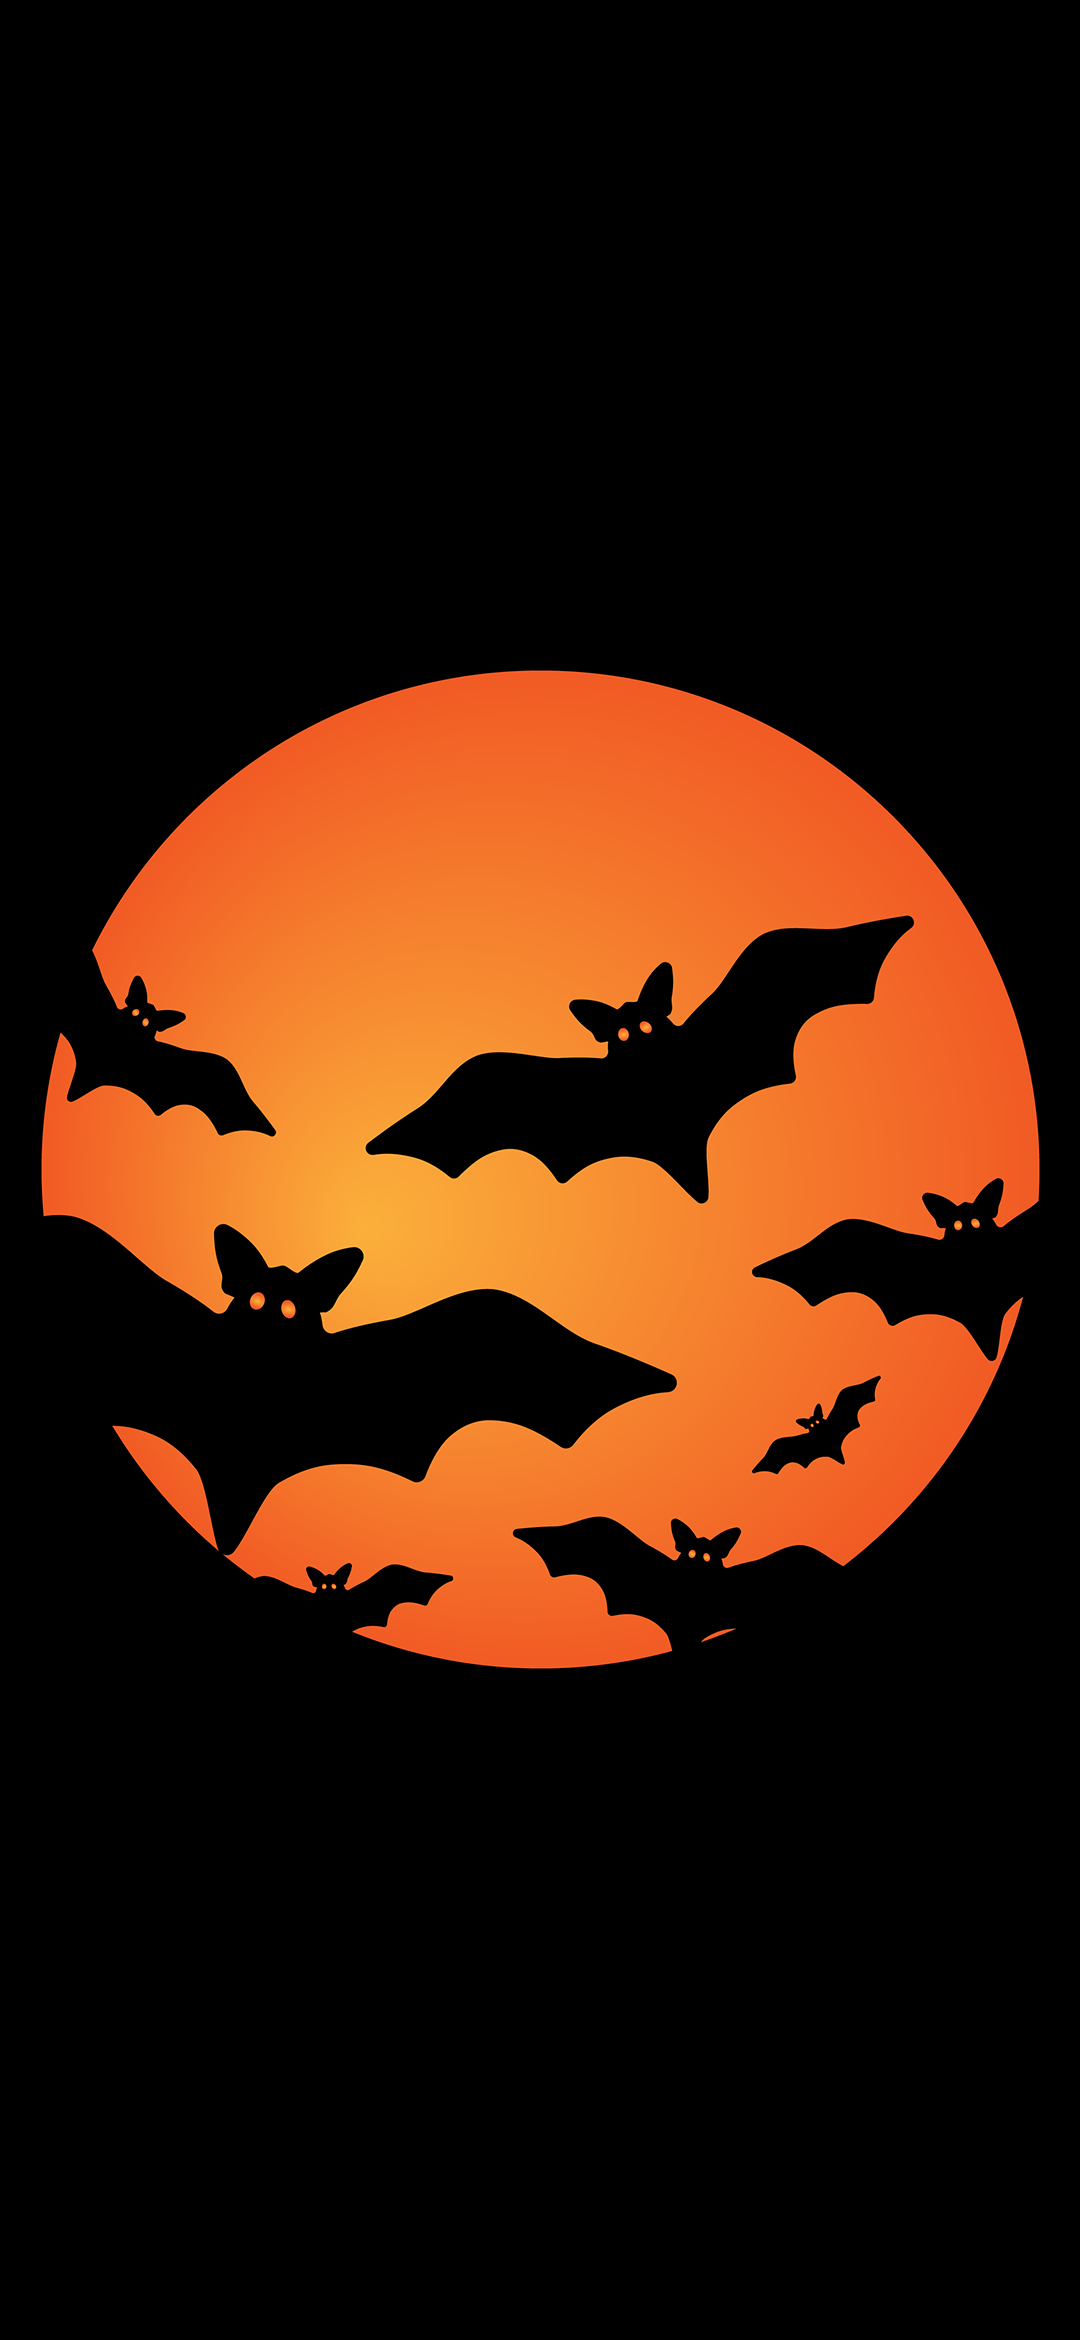 Bat Wallpaper Vector Images over 9700